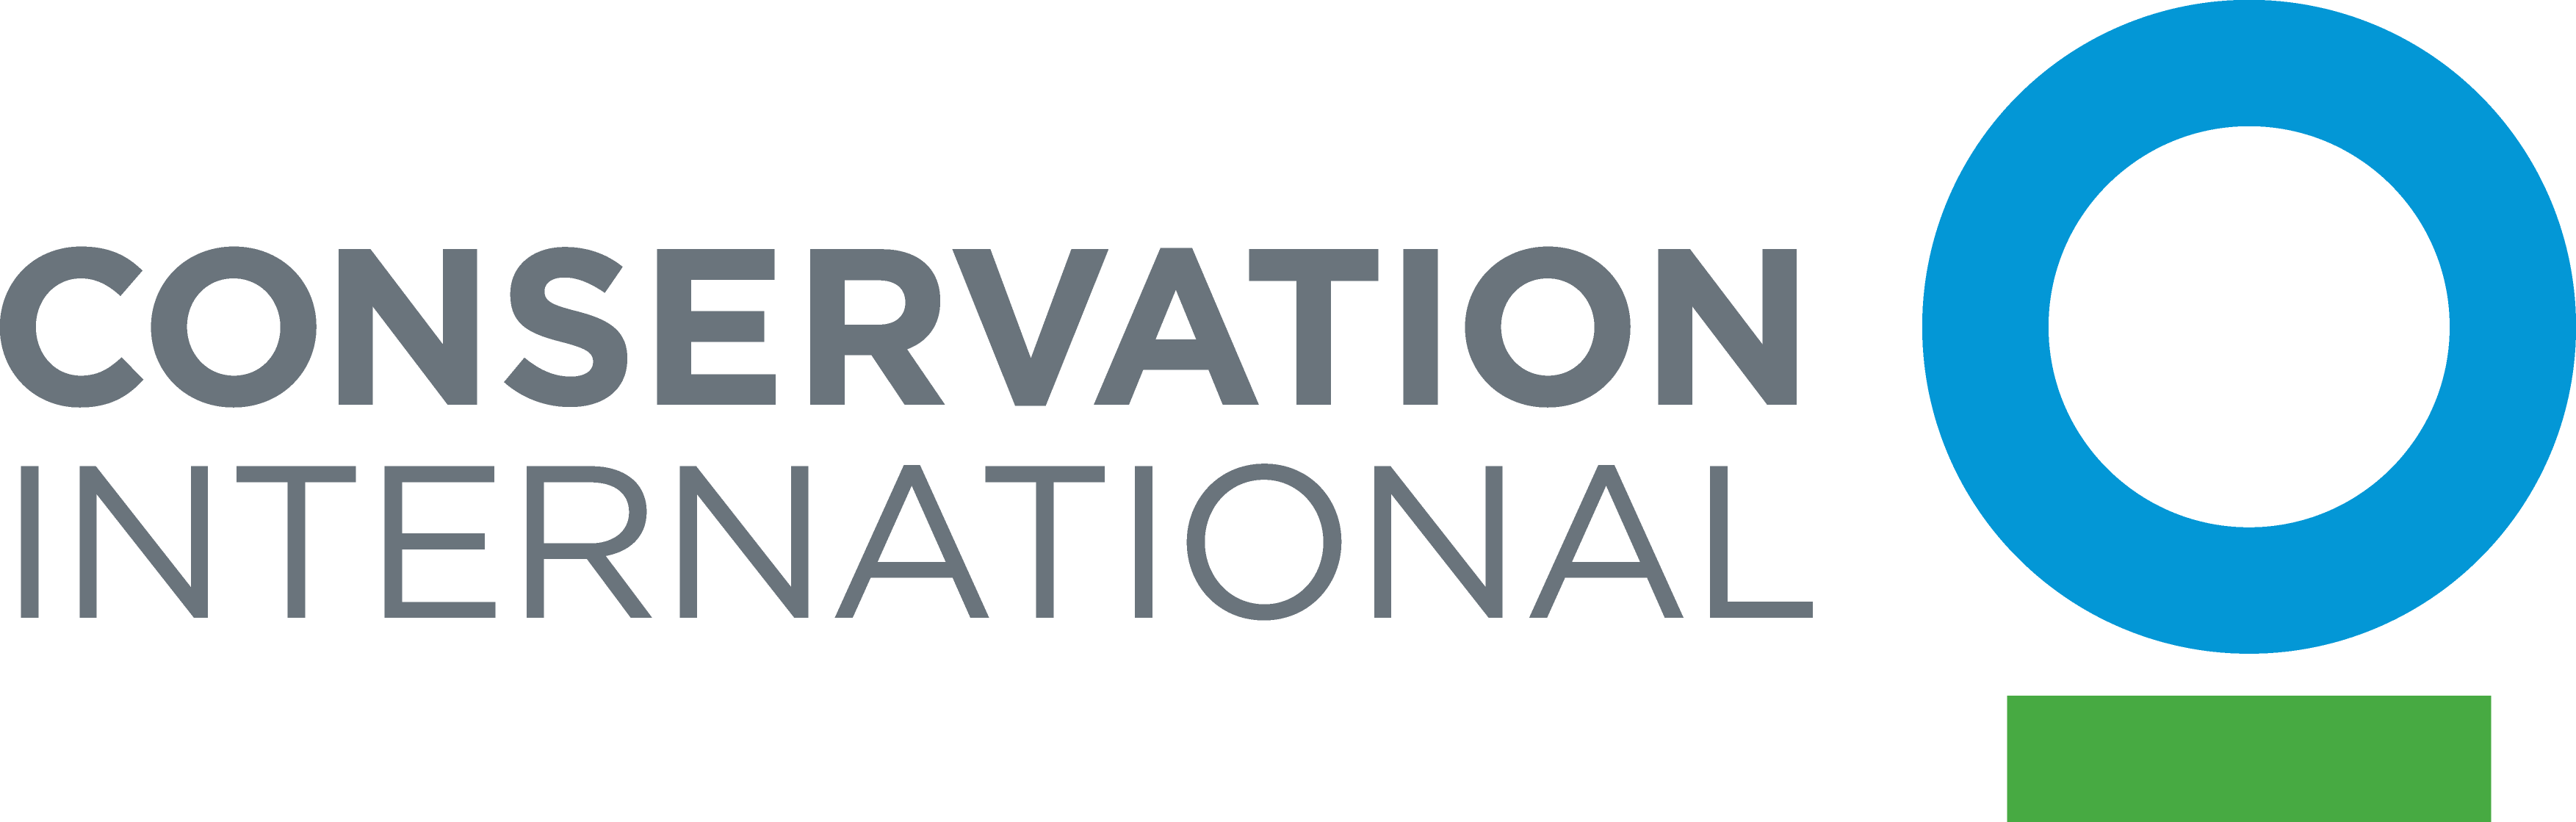 Conservation Logo - Conservation International Pacific Islands